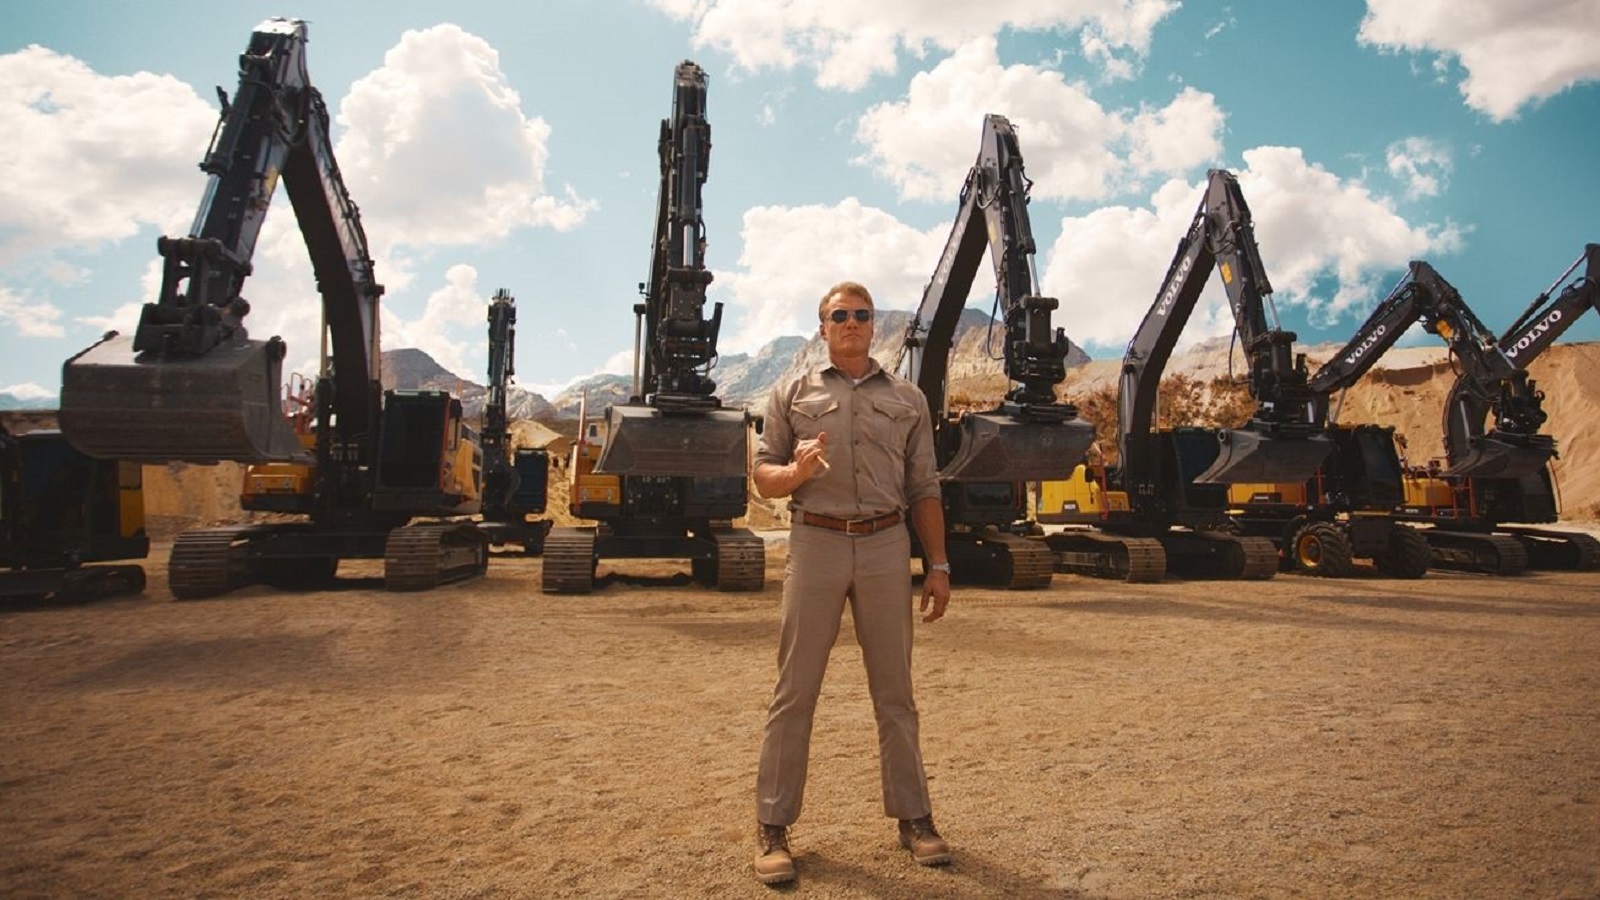 Hollywood Action Hero vs. Volvo Excavators. Who Wins?